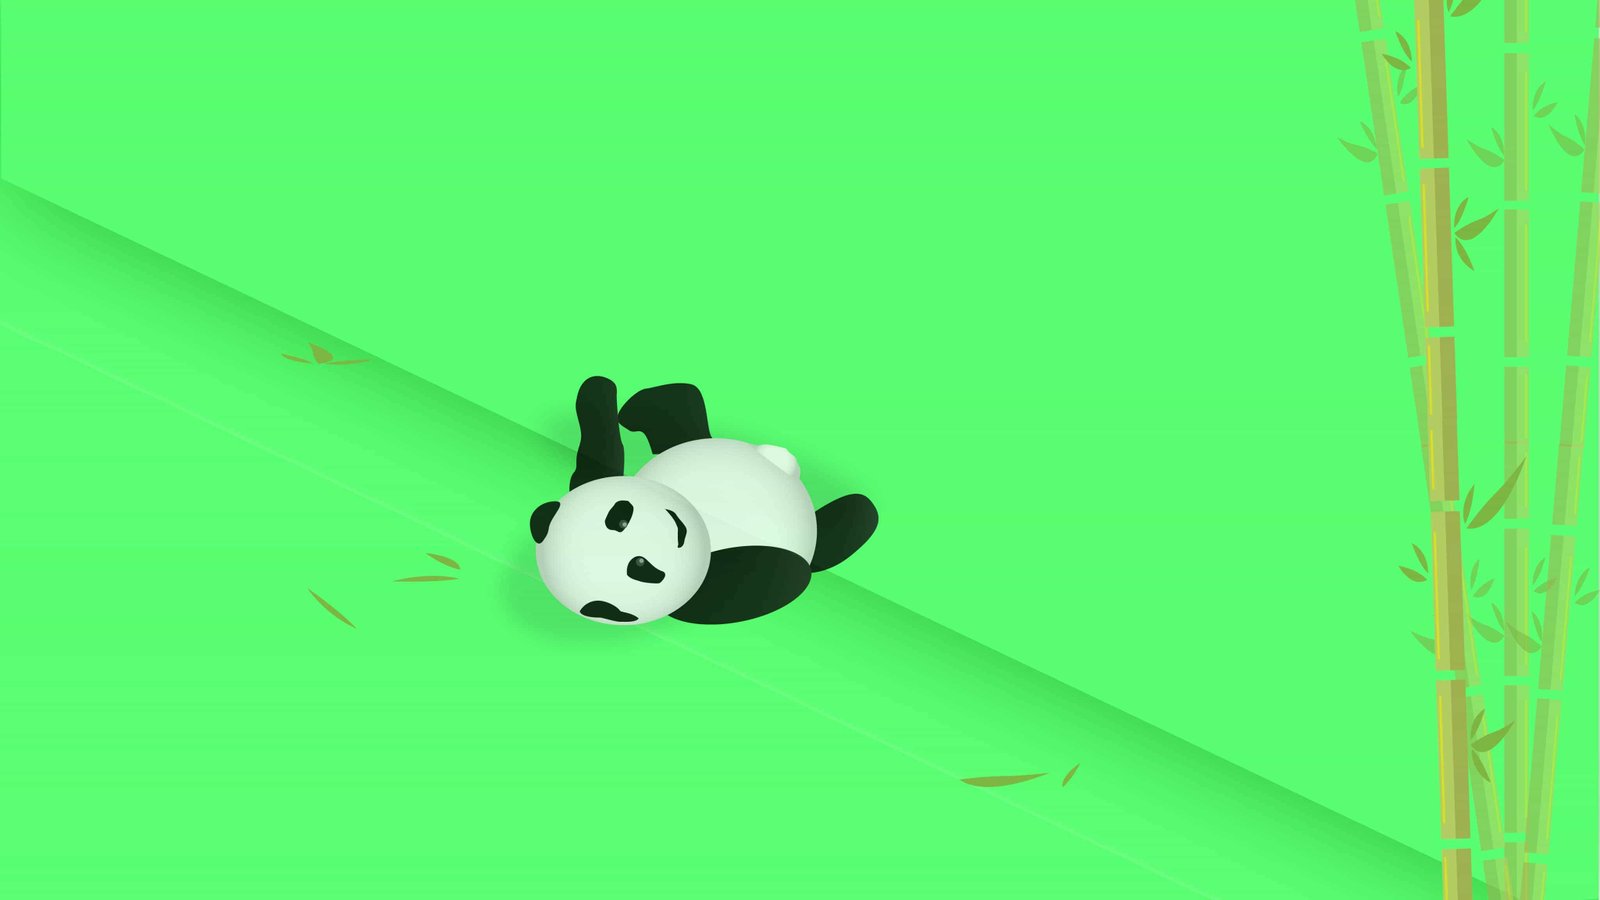 Cute panda rolling on the floor